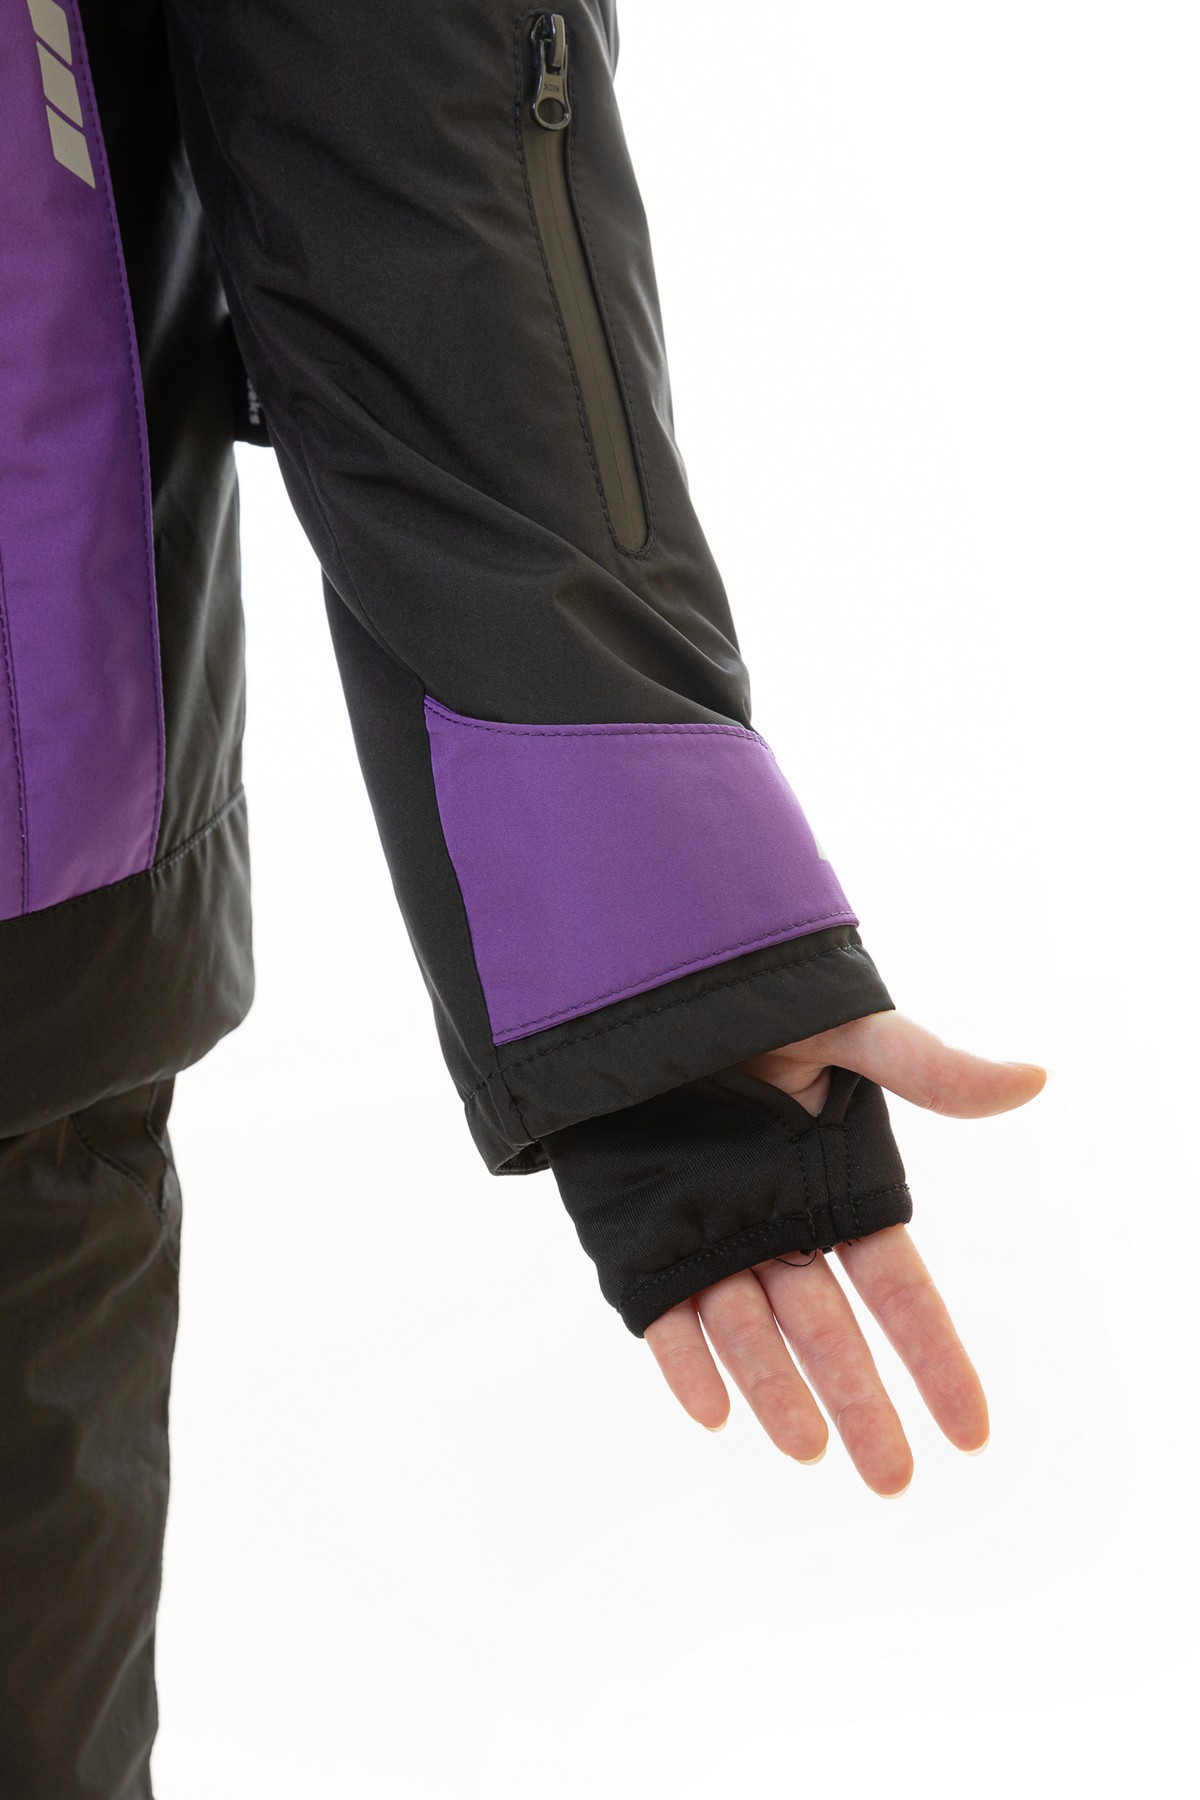 Зимняя женская куртка BRODEKS KW208, фиолетовый